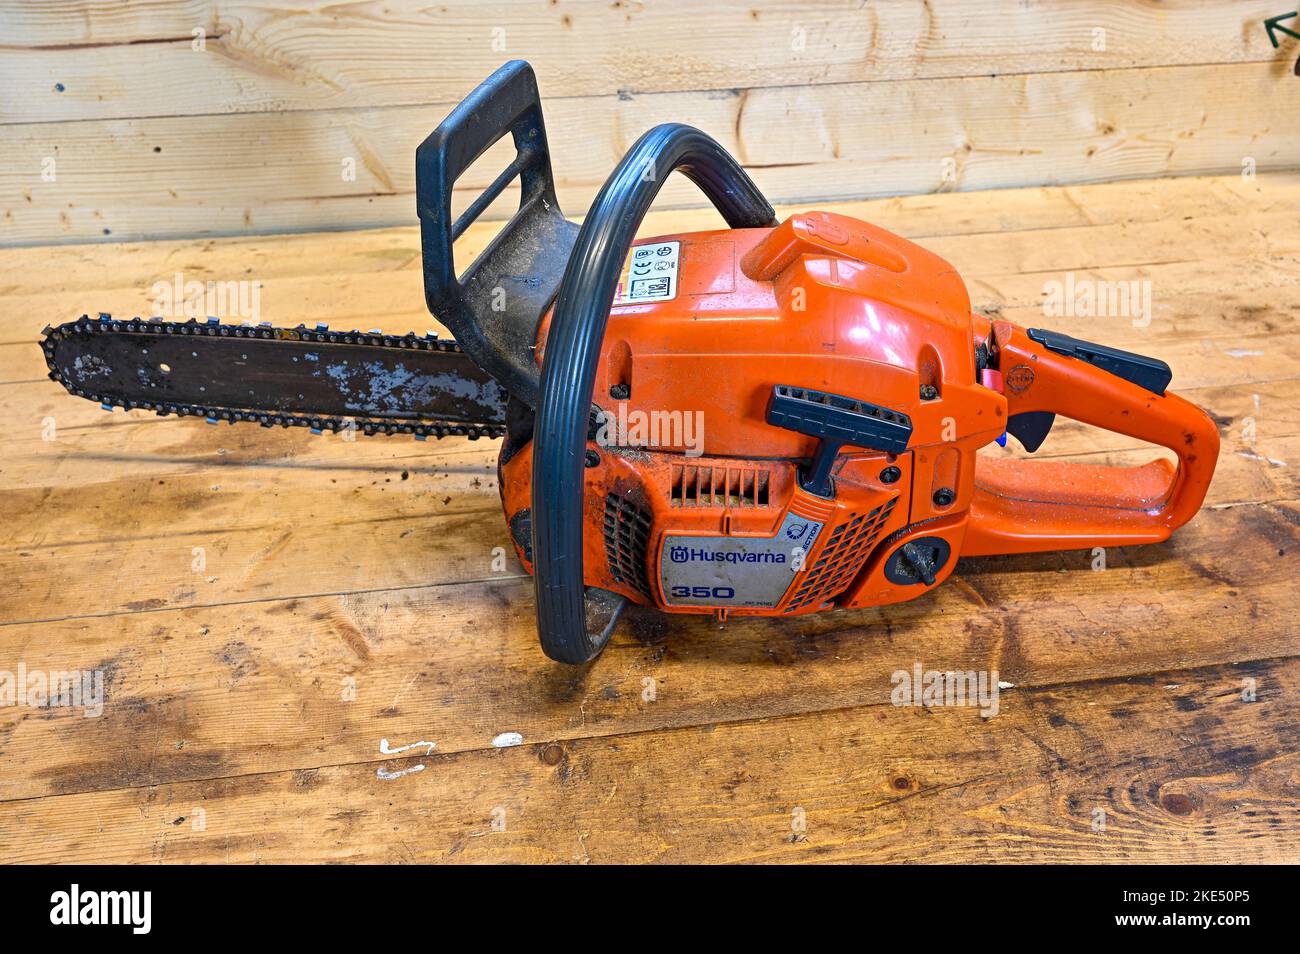 Orange chainsaw Husqvarna 350 standing on wooden workbench Stock Photo